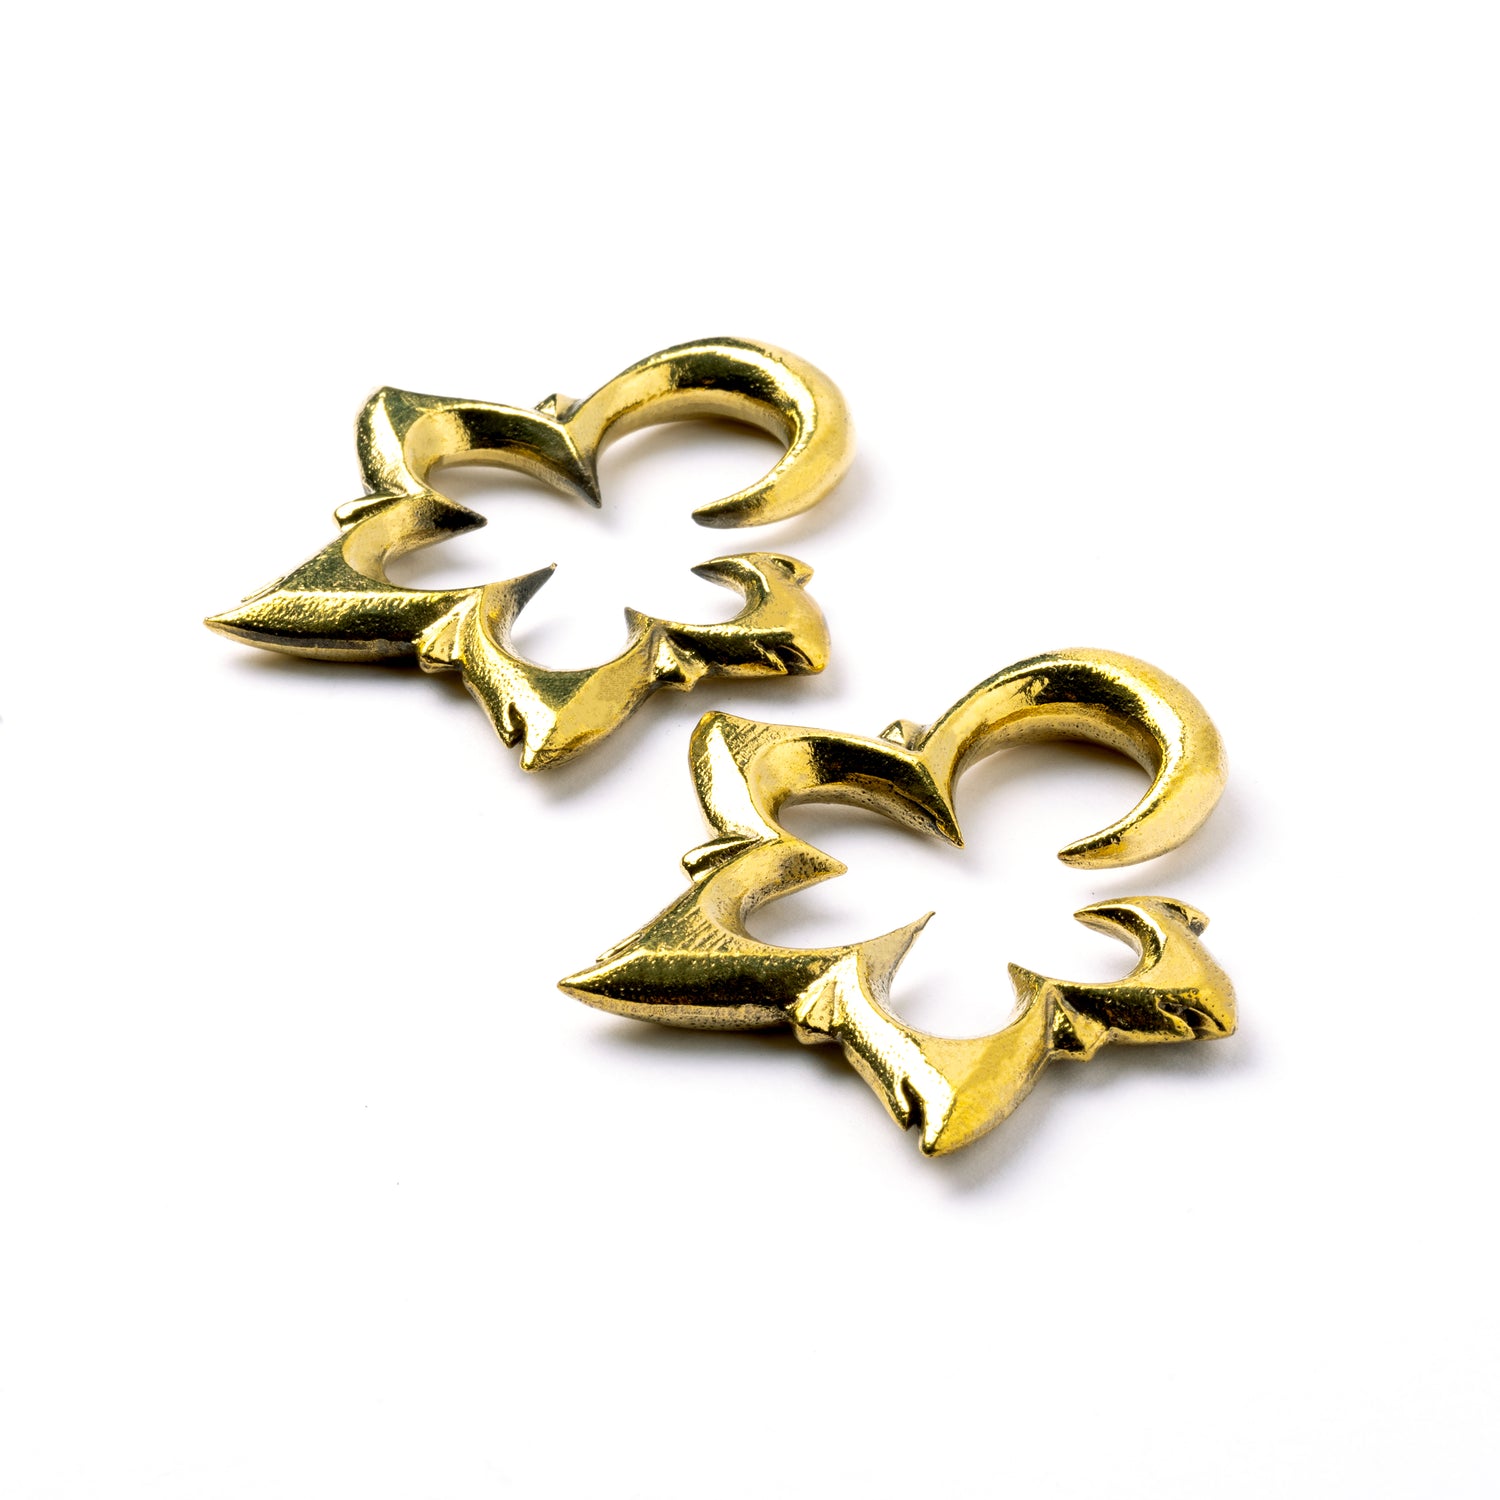 pair of gold brass flower open shape ear weights hangers left side view